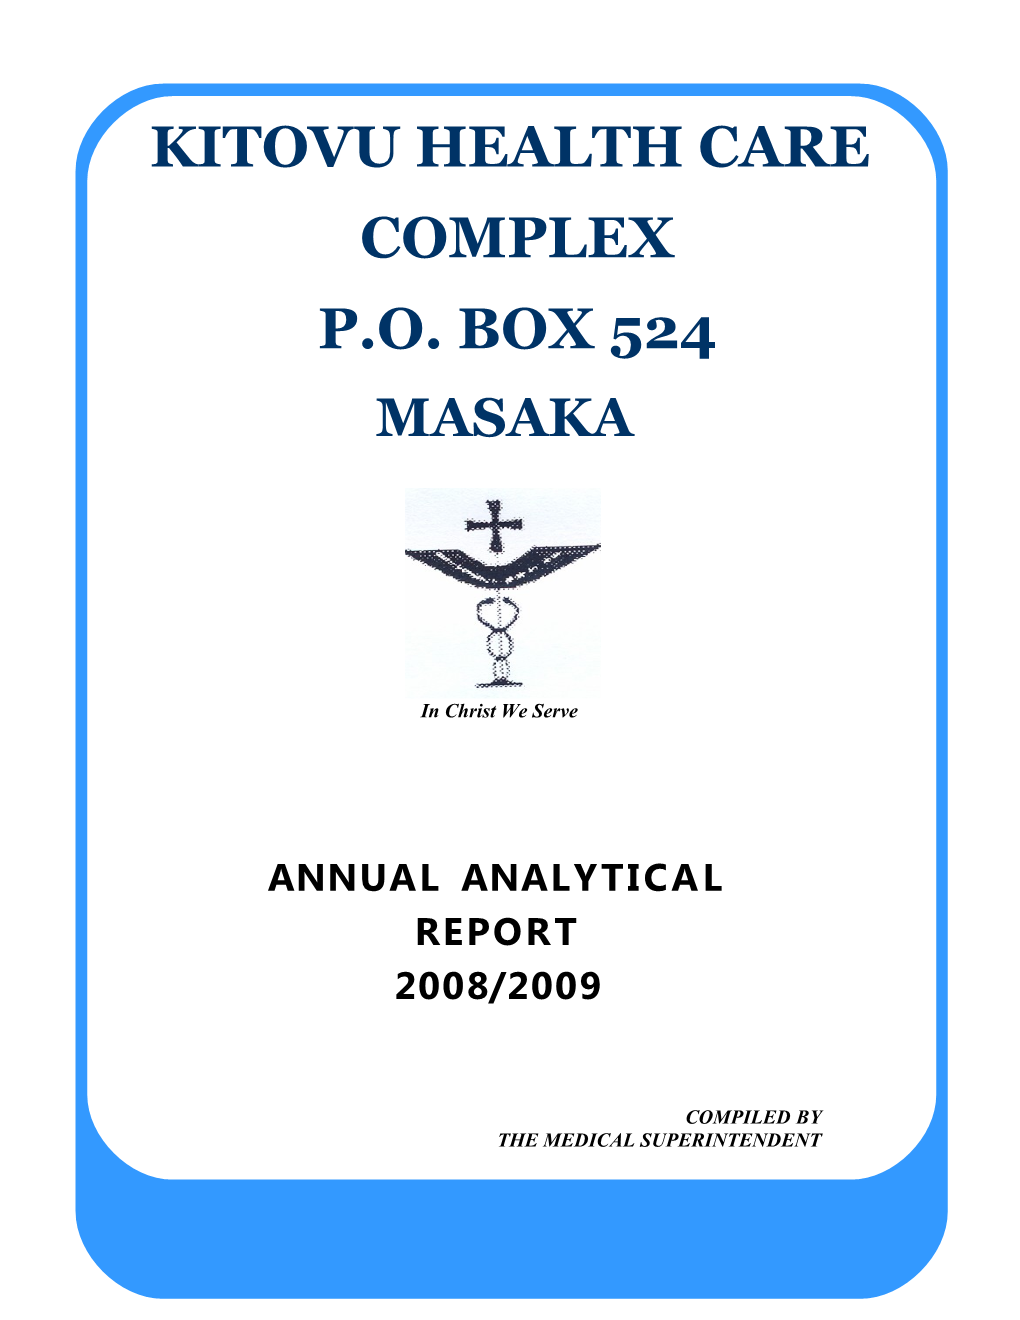 Kitovu Health Care Complex P.O. Box 524 Masaka